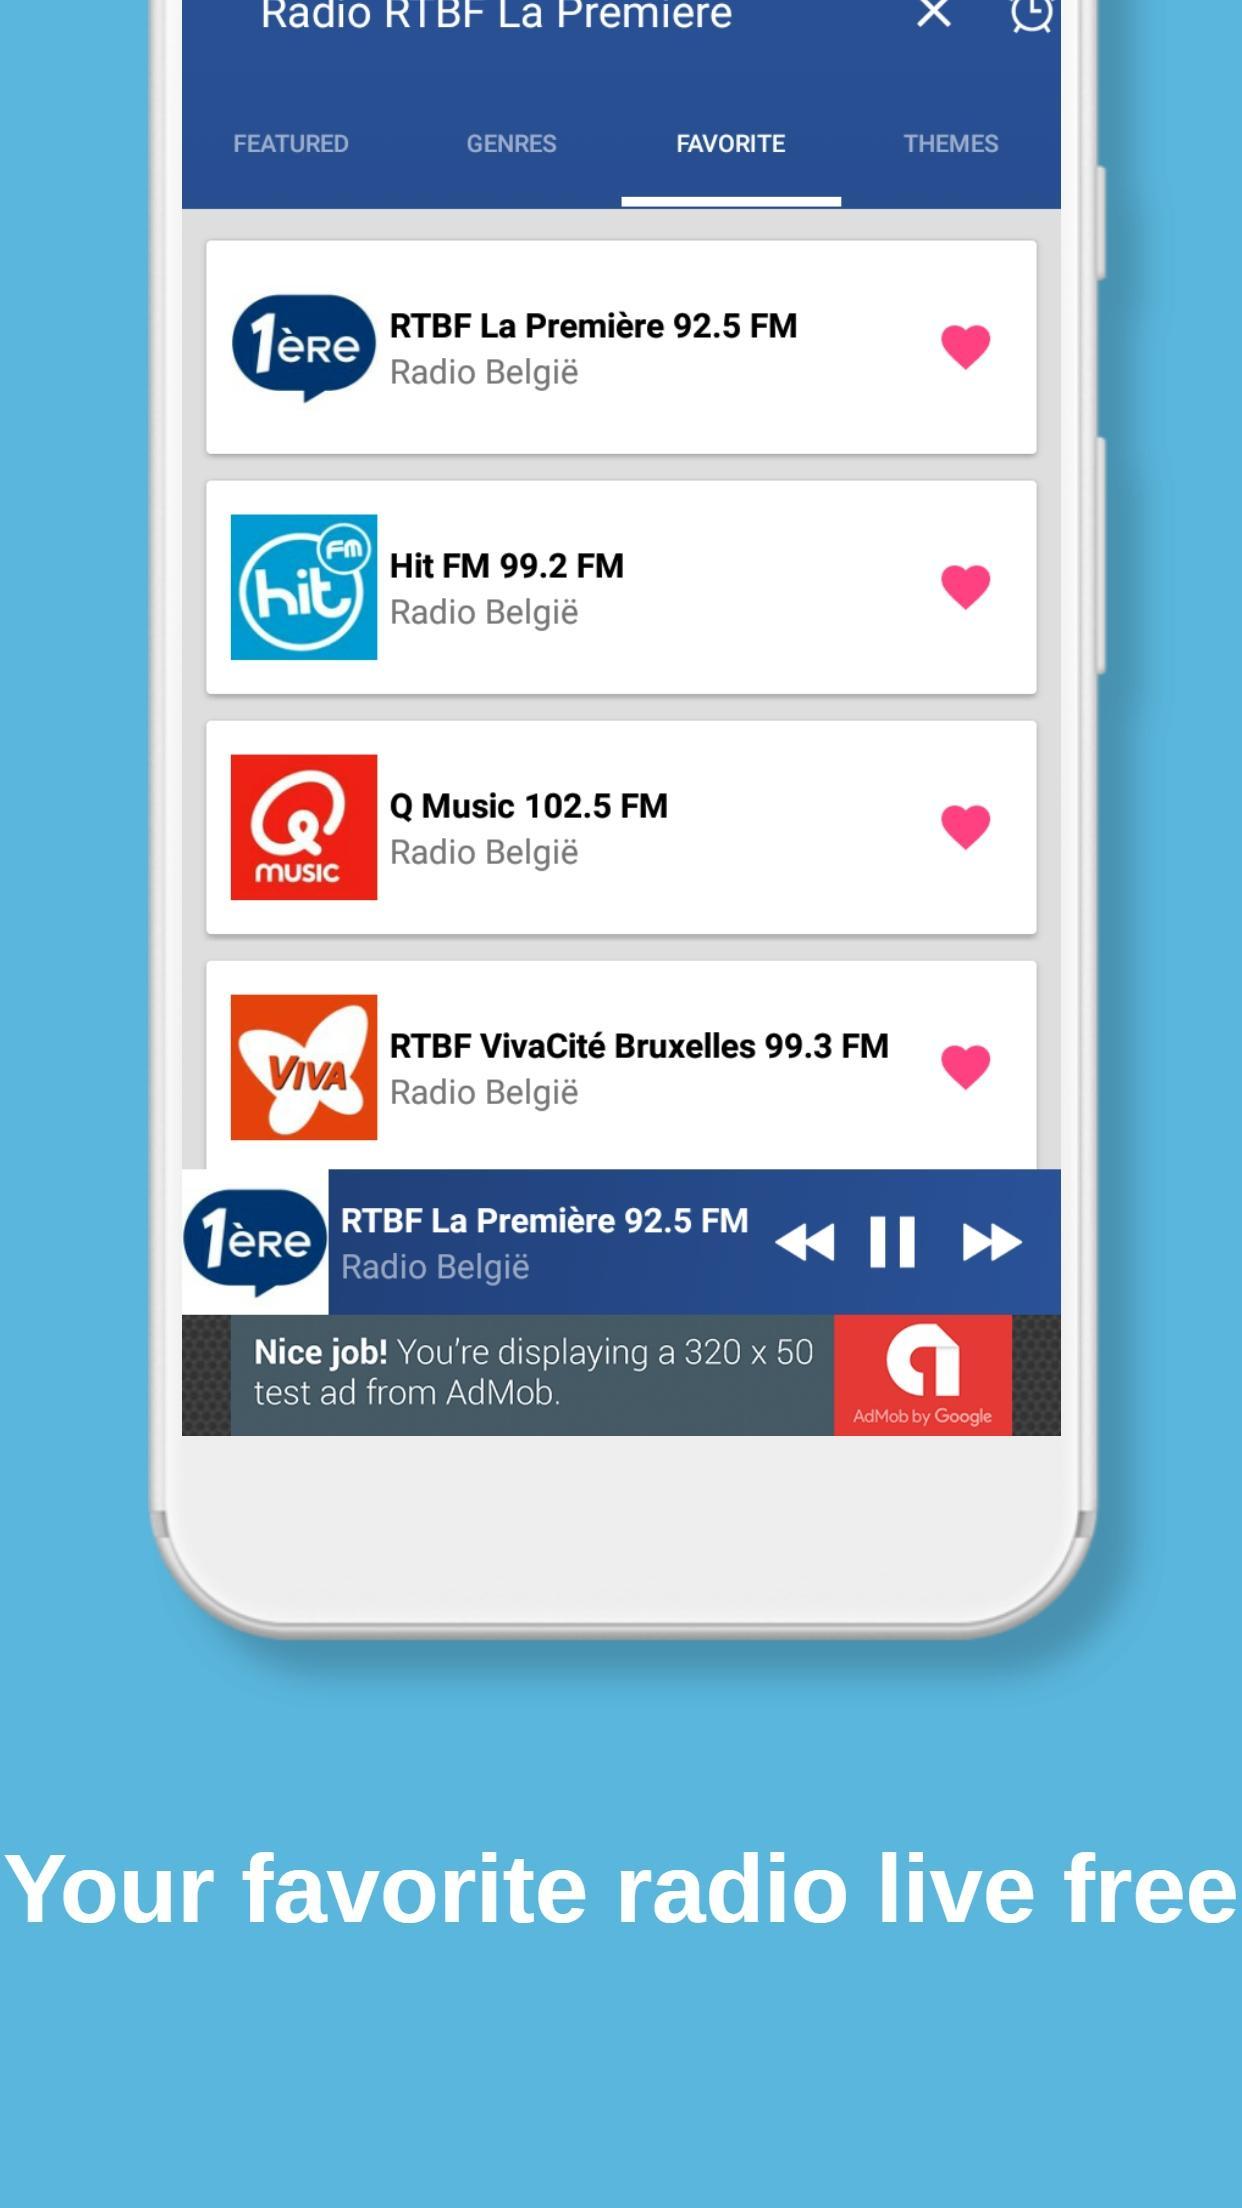 Radio RTBF La Premiere Belgium for Android - APK Download